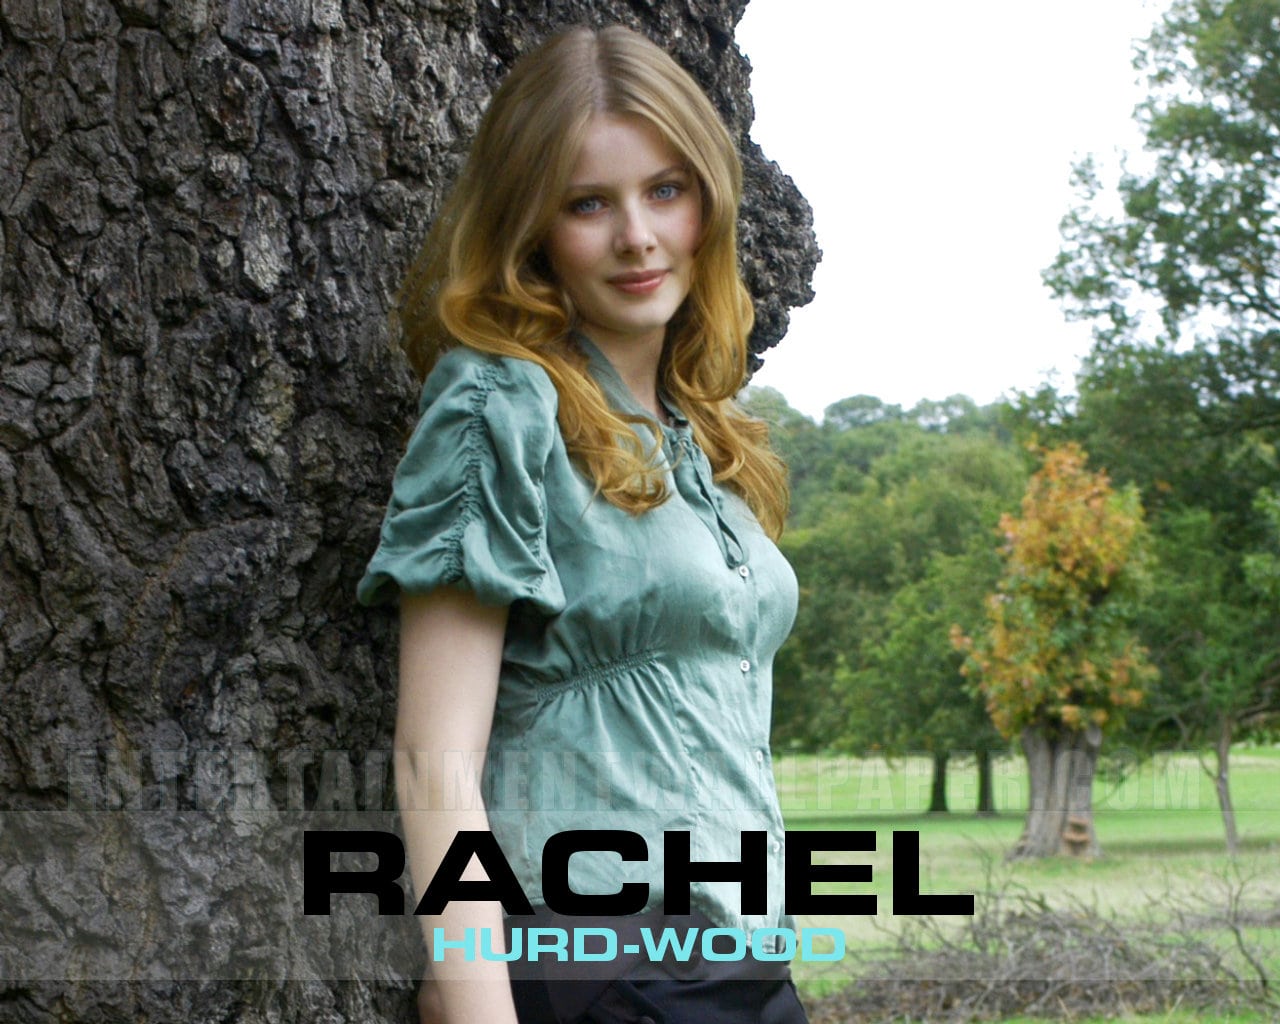 Rachel hurd-wood bikini